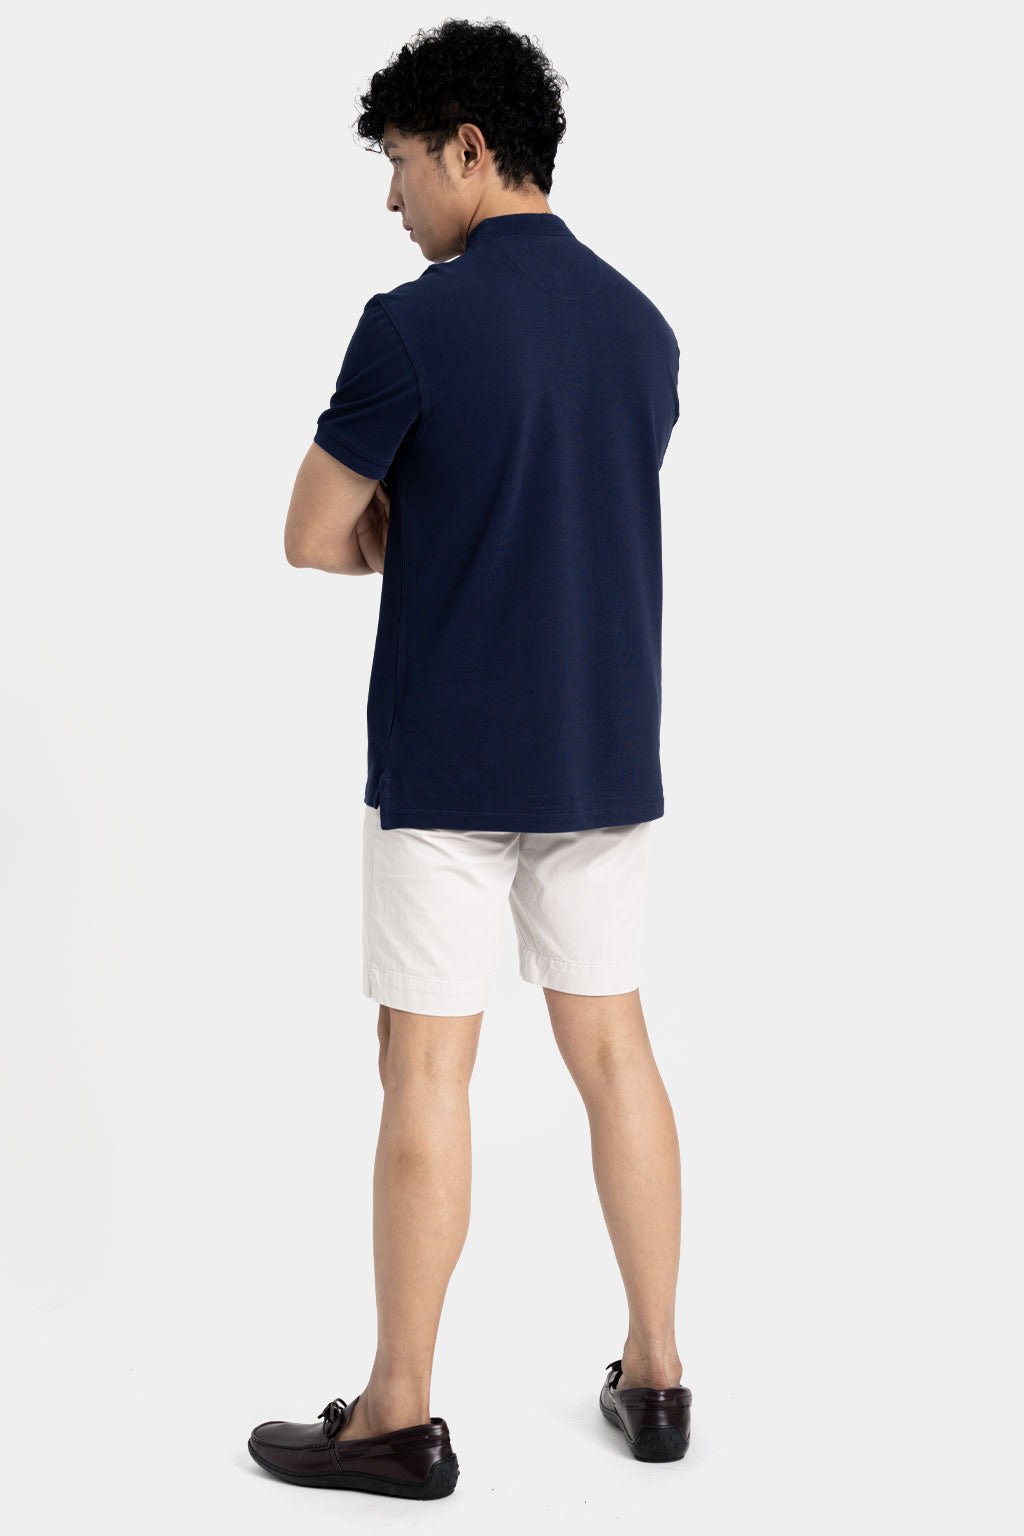 Bianco & Nero - Men's Polo T-Shirt